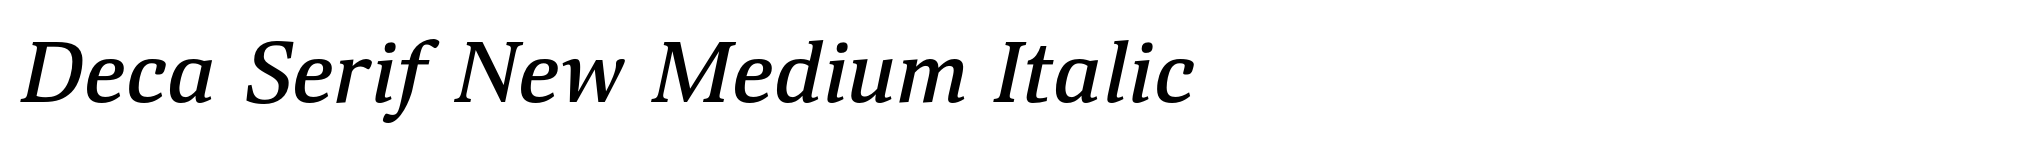 Deca Serif New Medium Italic image